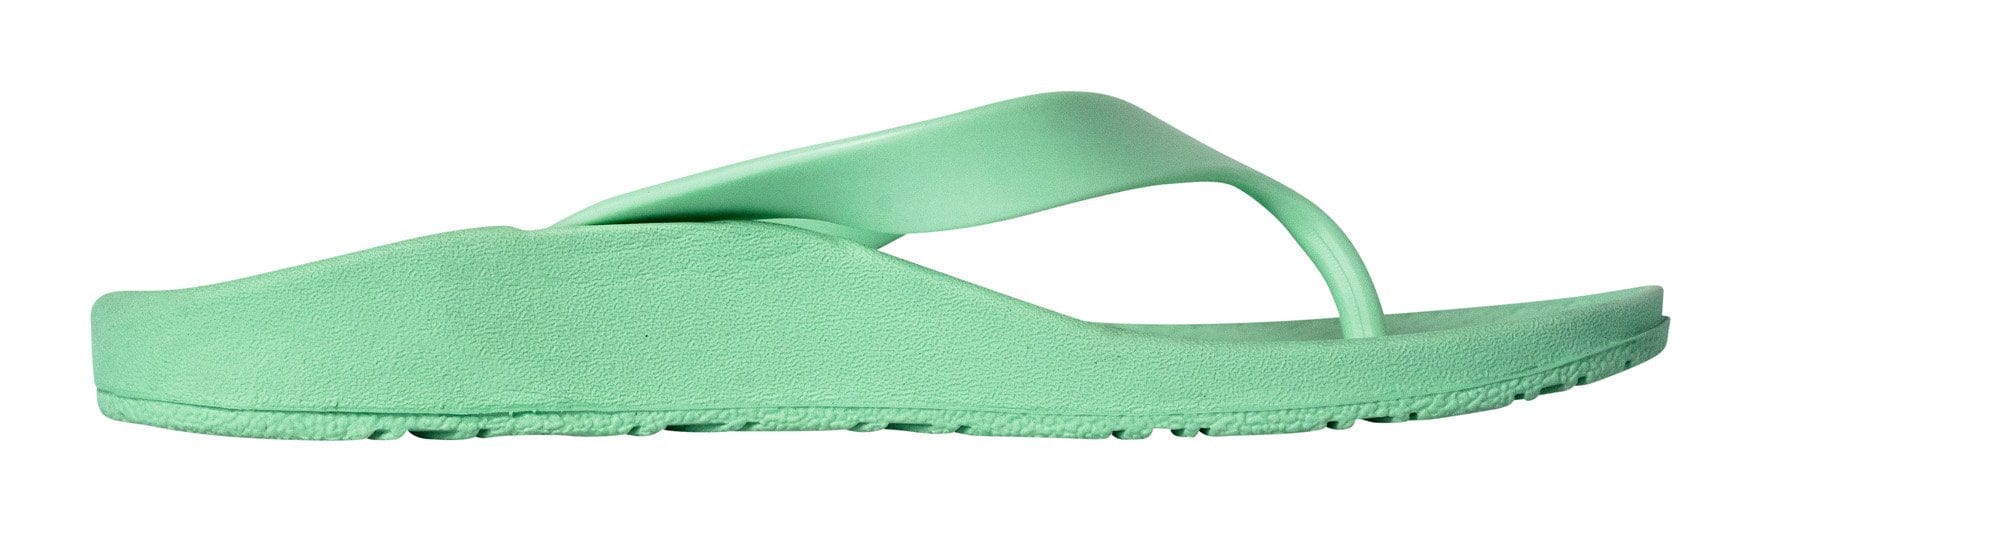 Foot HQ Footwear Archline Orthotic Arch Support Flip Flop Thongs (Honey Dew Green)